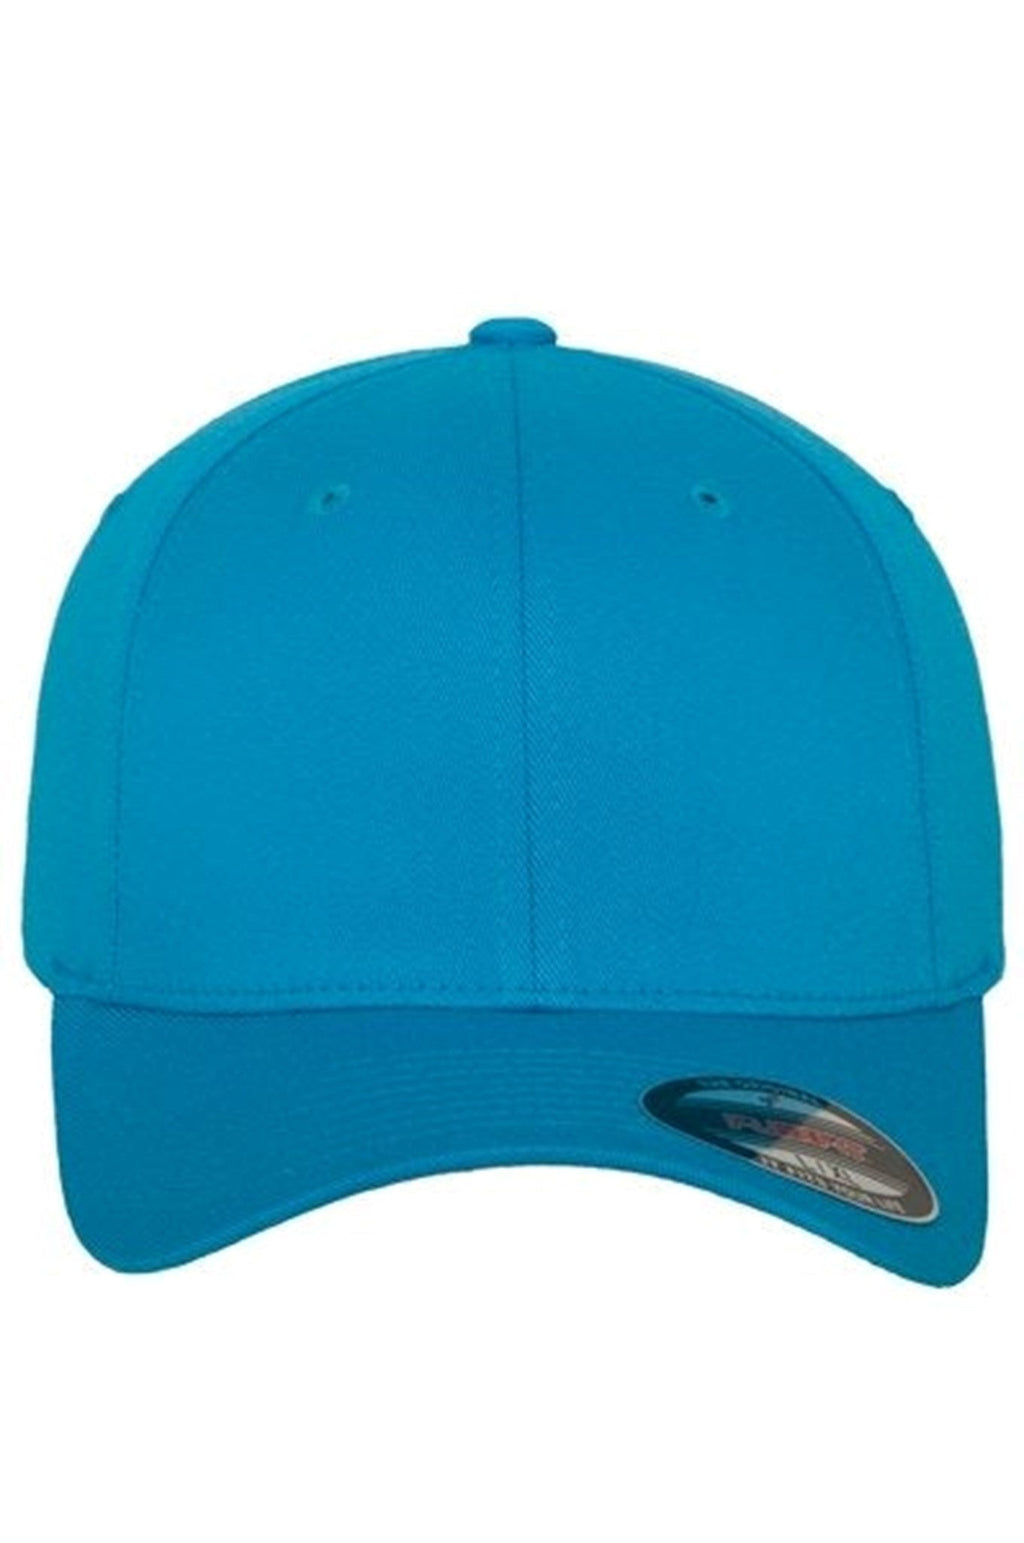 FlexFit原始棒球帽 - 绿松石蓝色